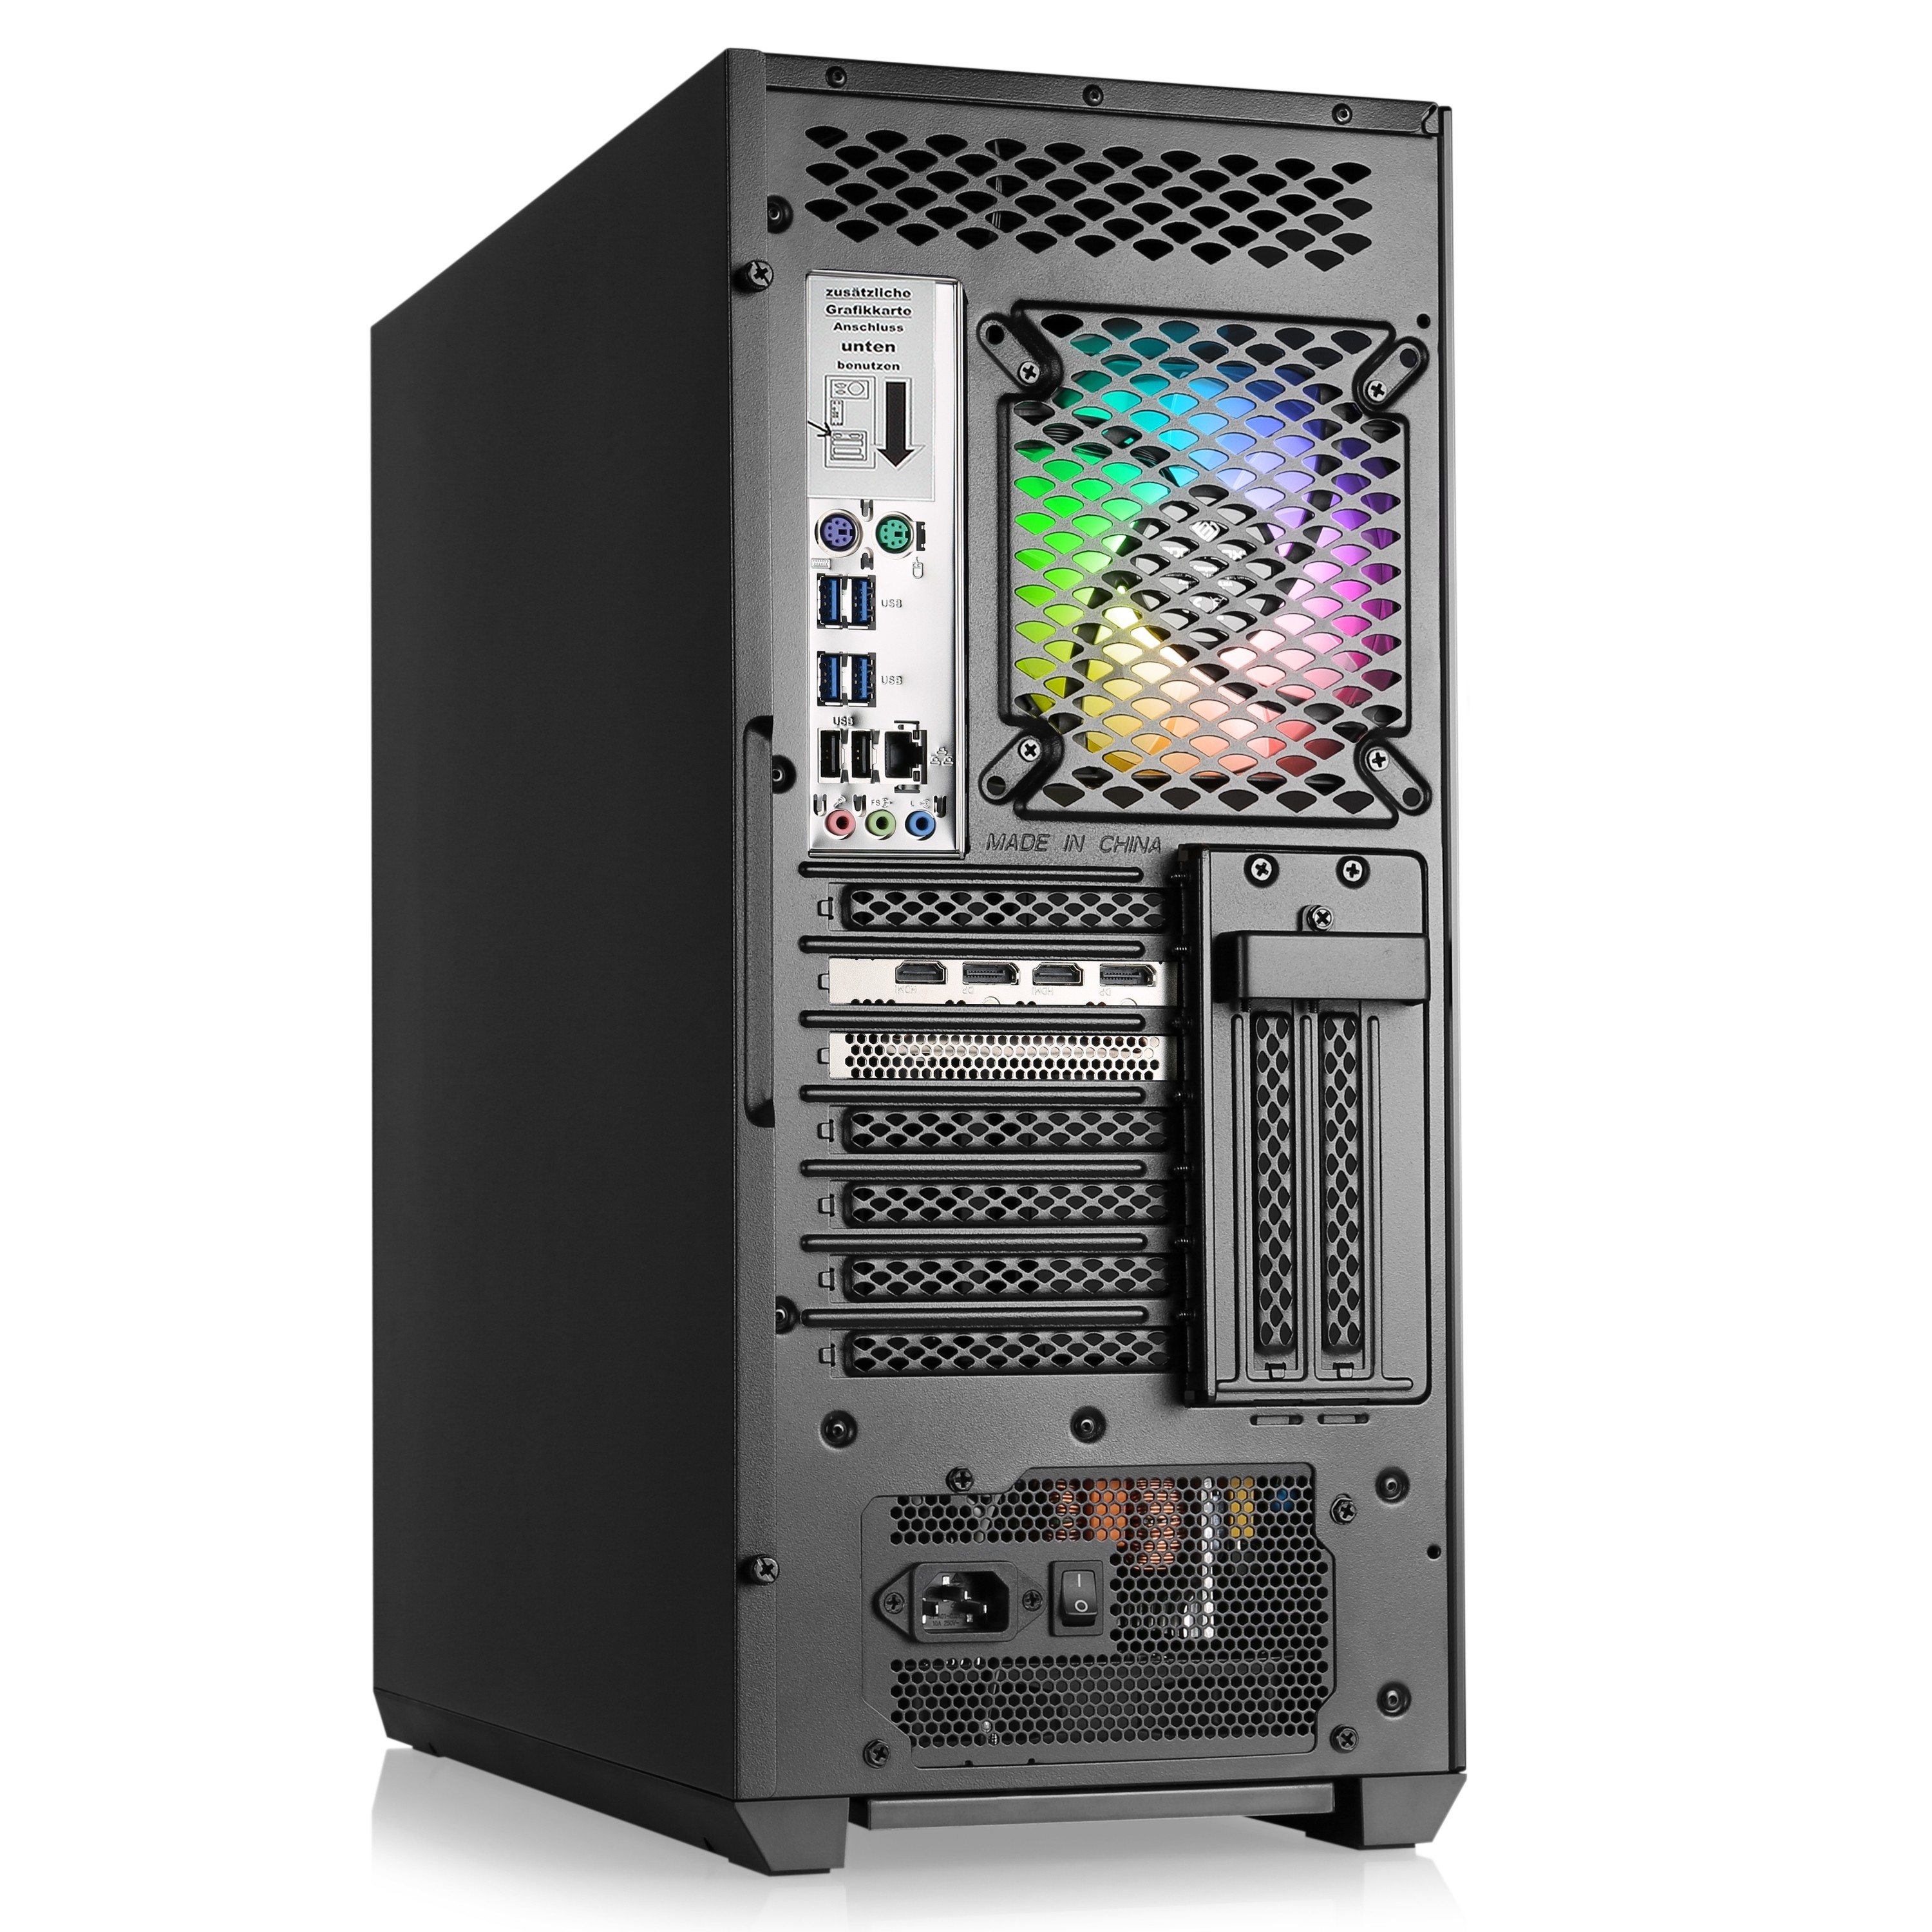 CSL Computer  Carte mère AMD Ryzen 5 7600 / ASUS TUF GAMING B650-PLUS WiFi  Bundle